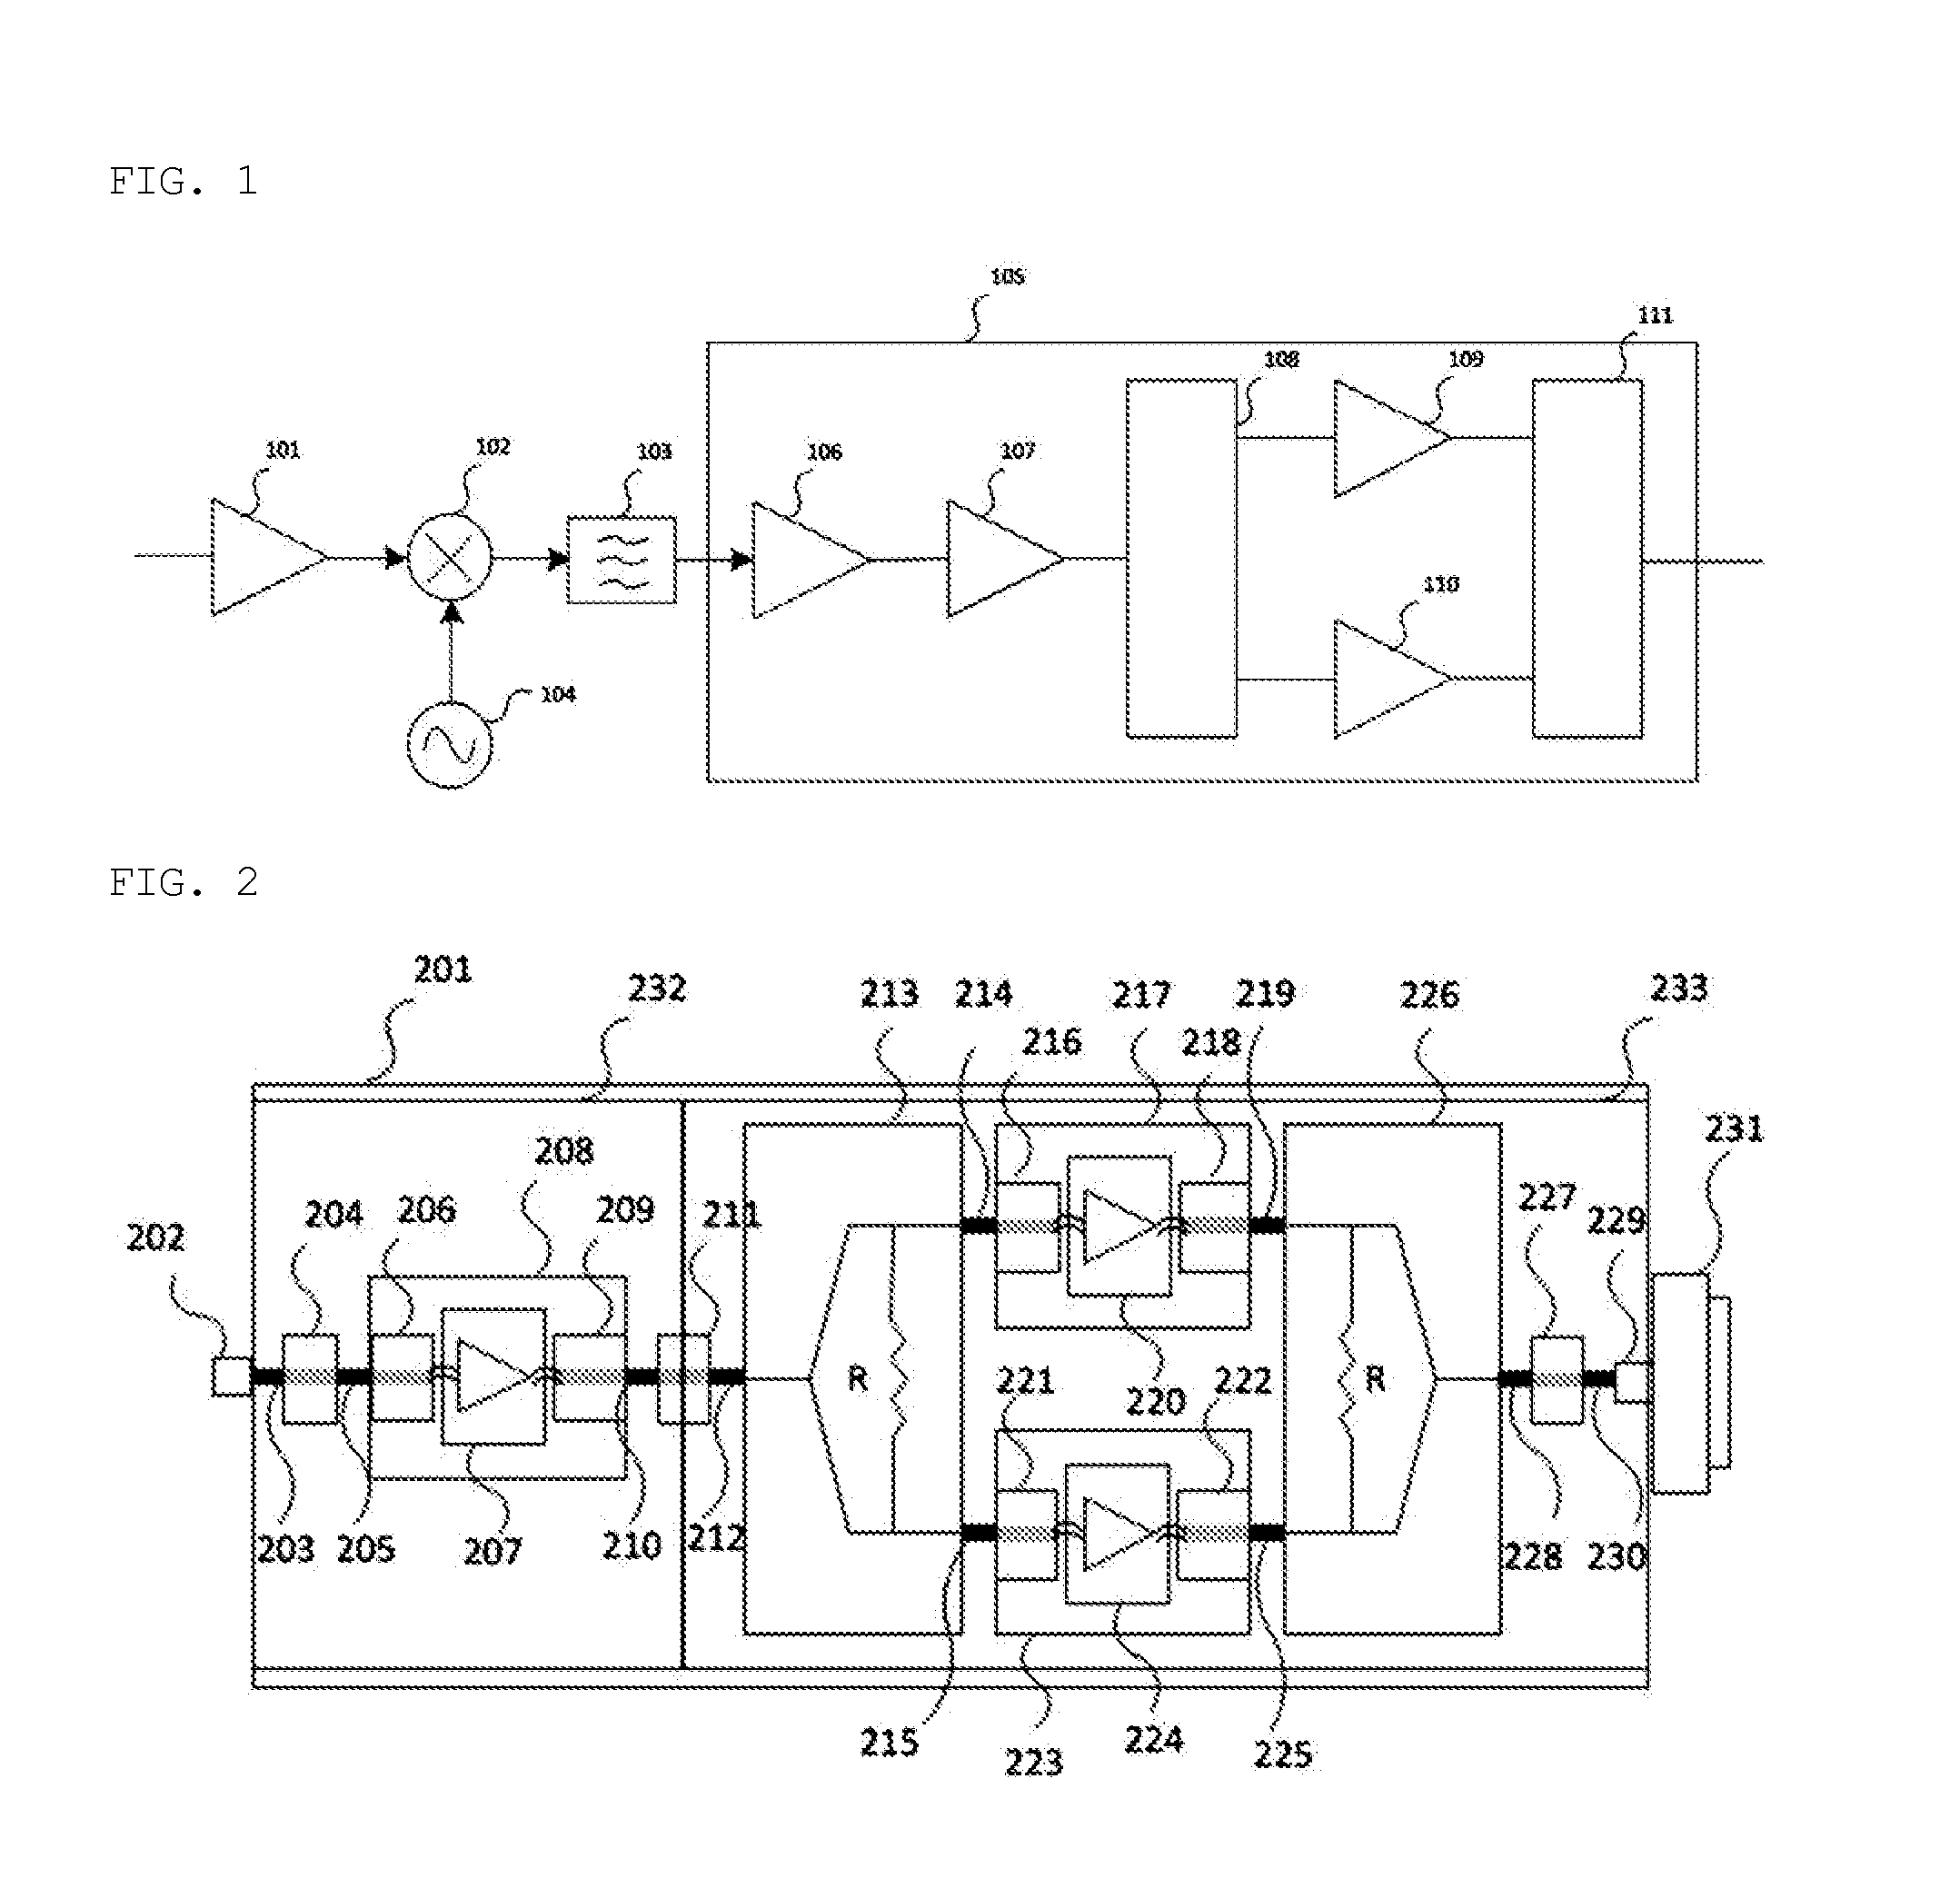 Ka-band high power amplifier structure having minimum processing and assembling errors